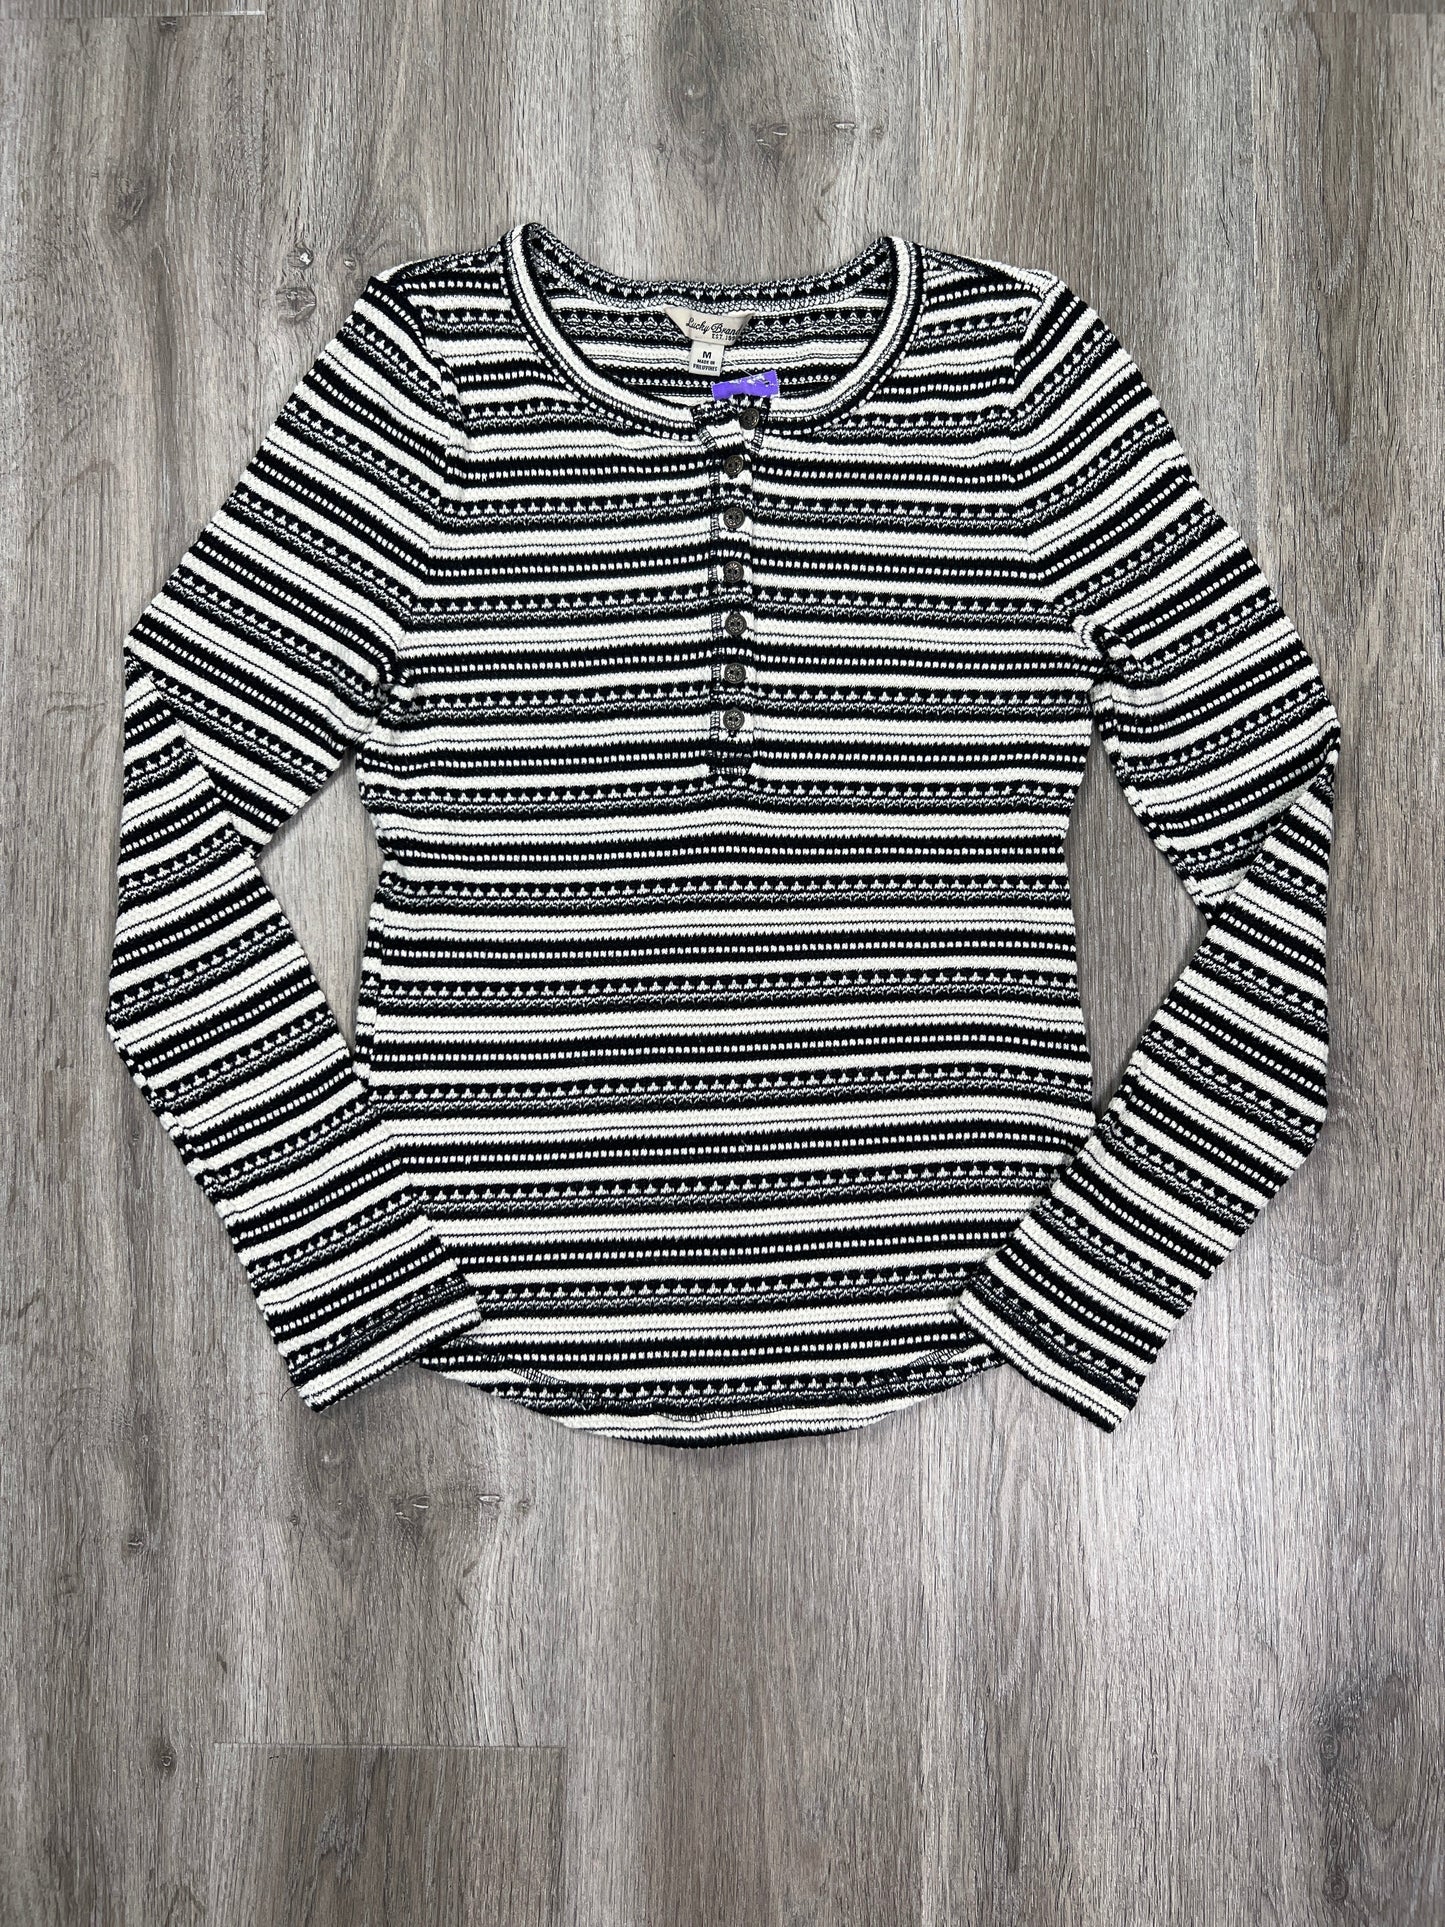 Black & Cream Sweater Lucky Brand, Size M